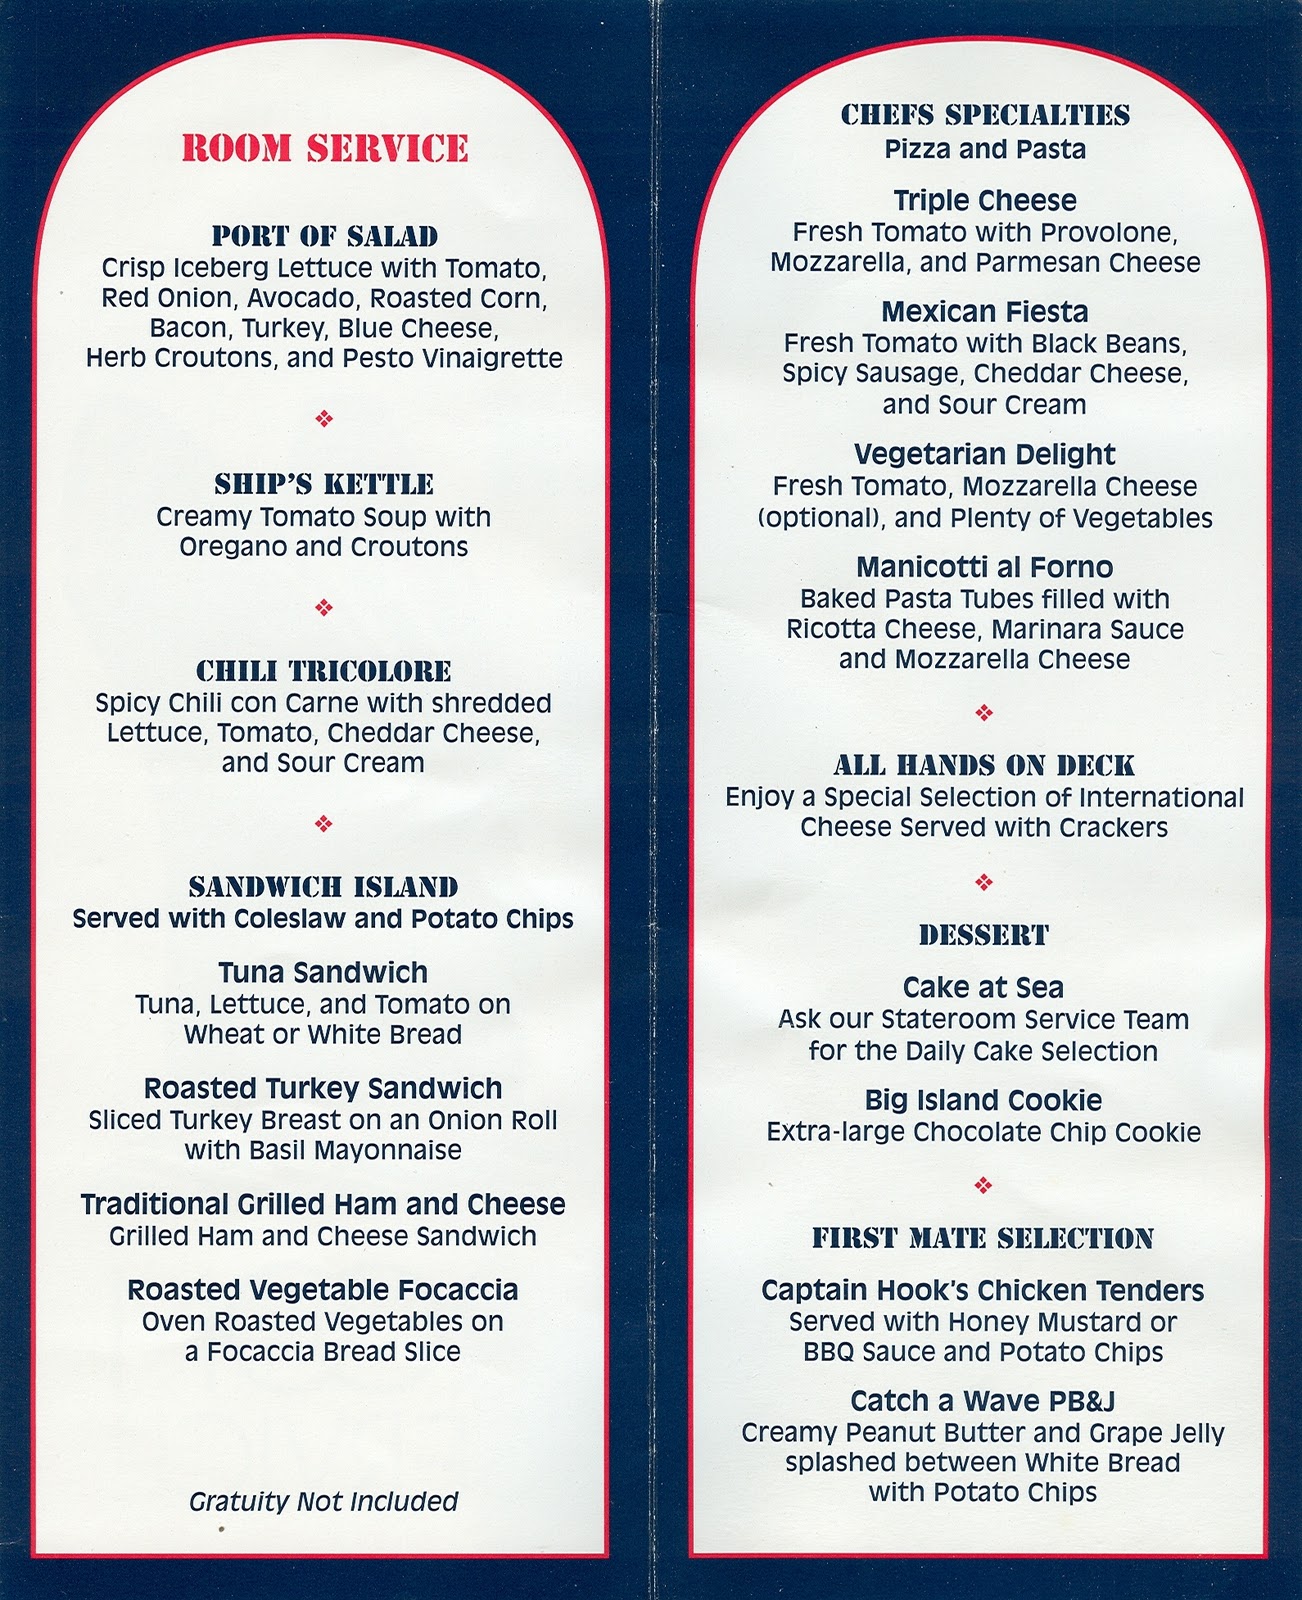 disney magic cruise room service menu